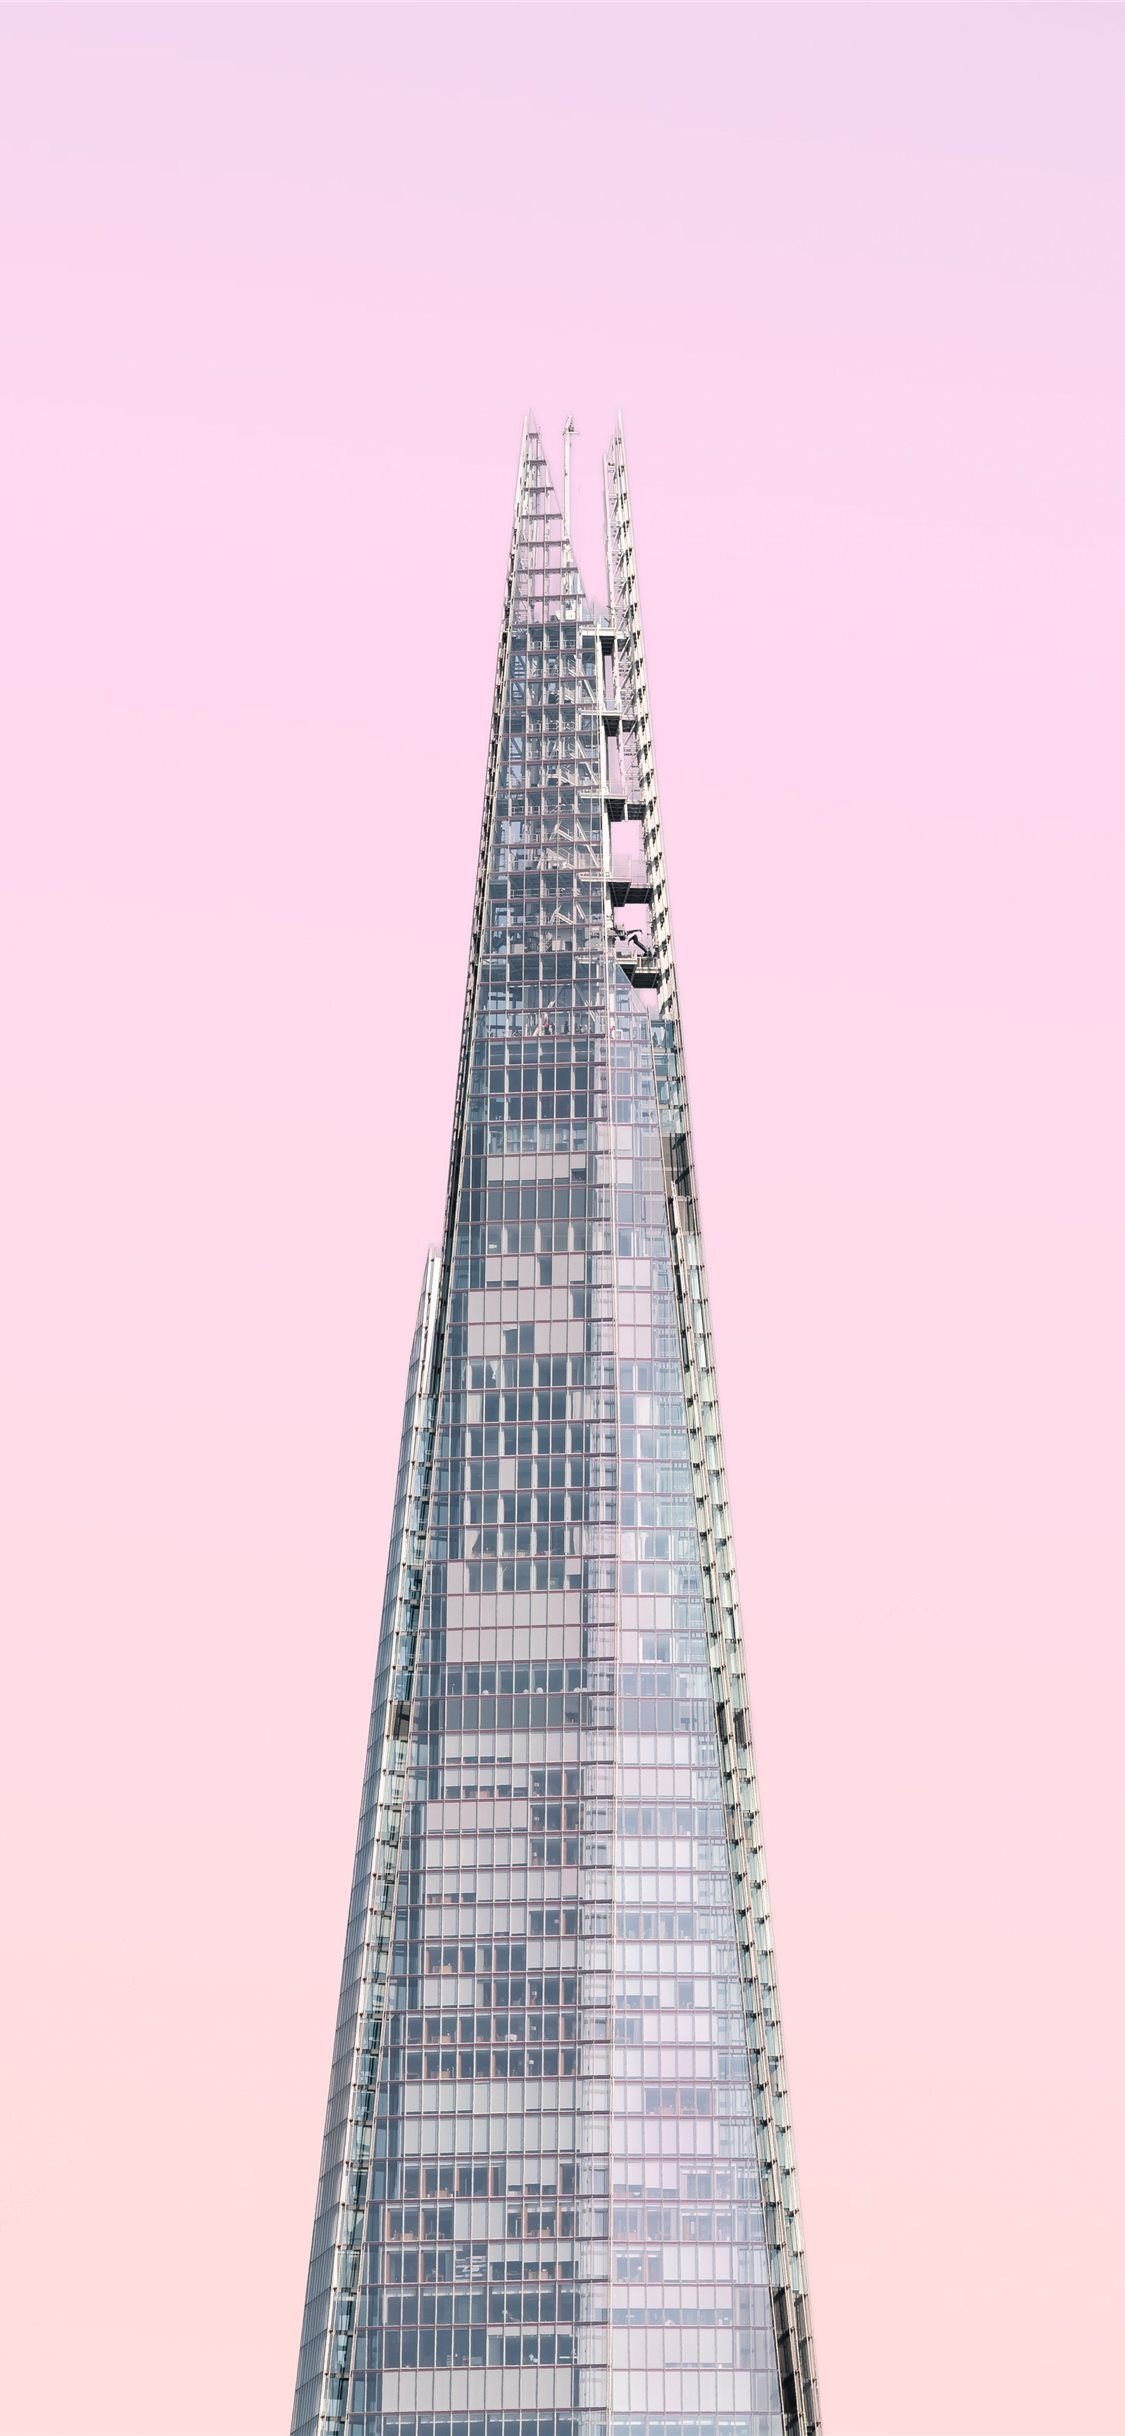 Minimal Architecture London Series iPhone X Wallpaper Free Download